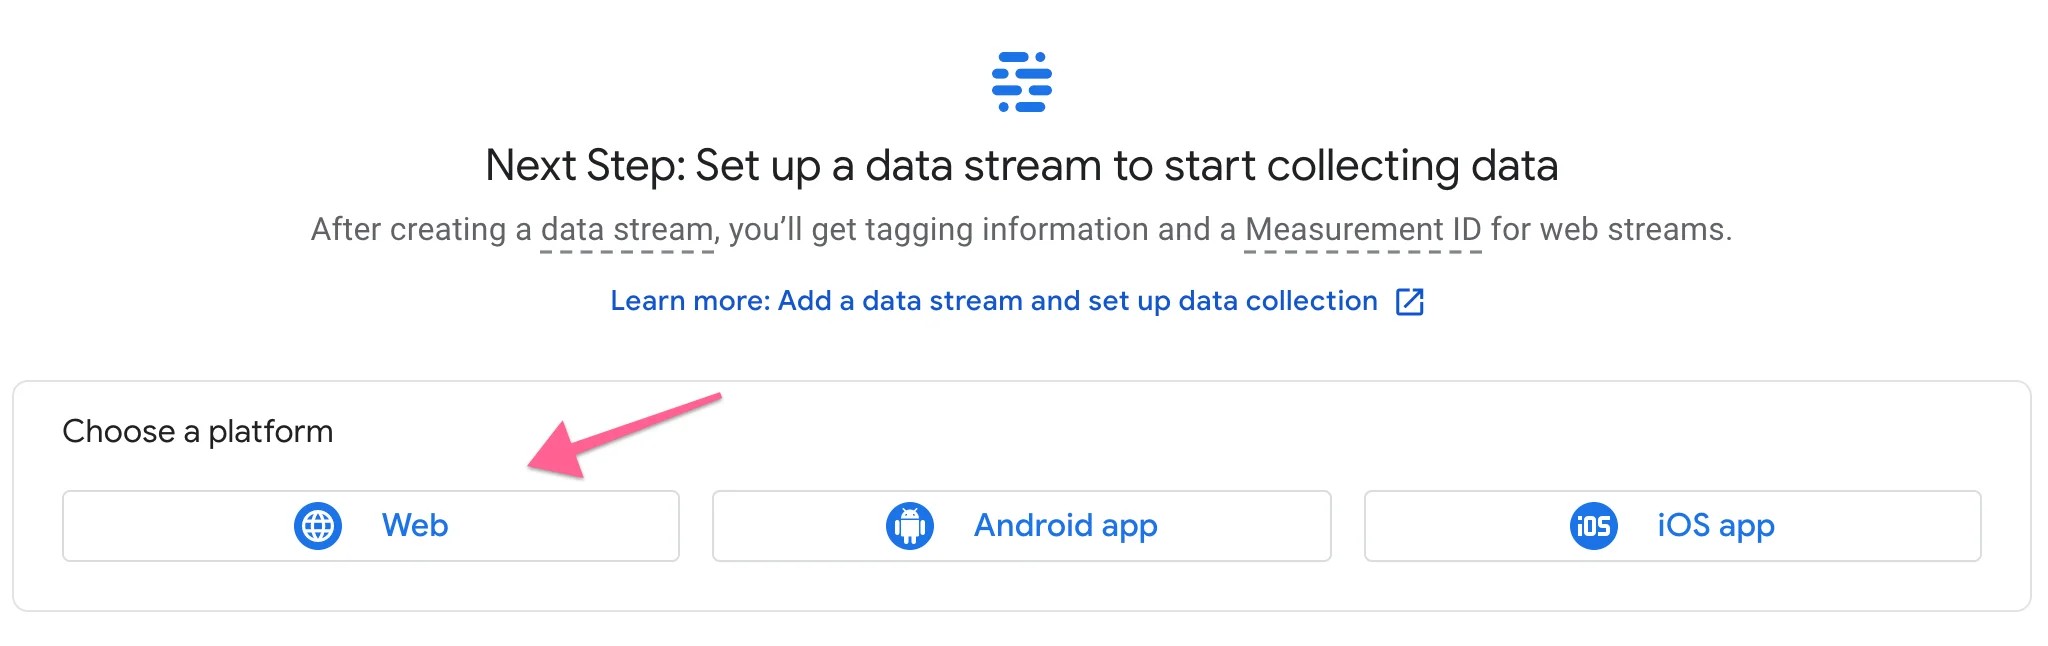 Google Analytics 4 Data Stream setup